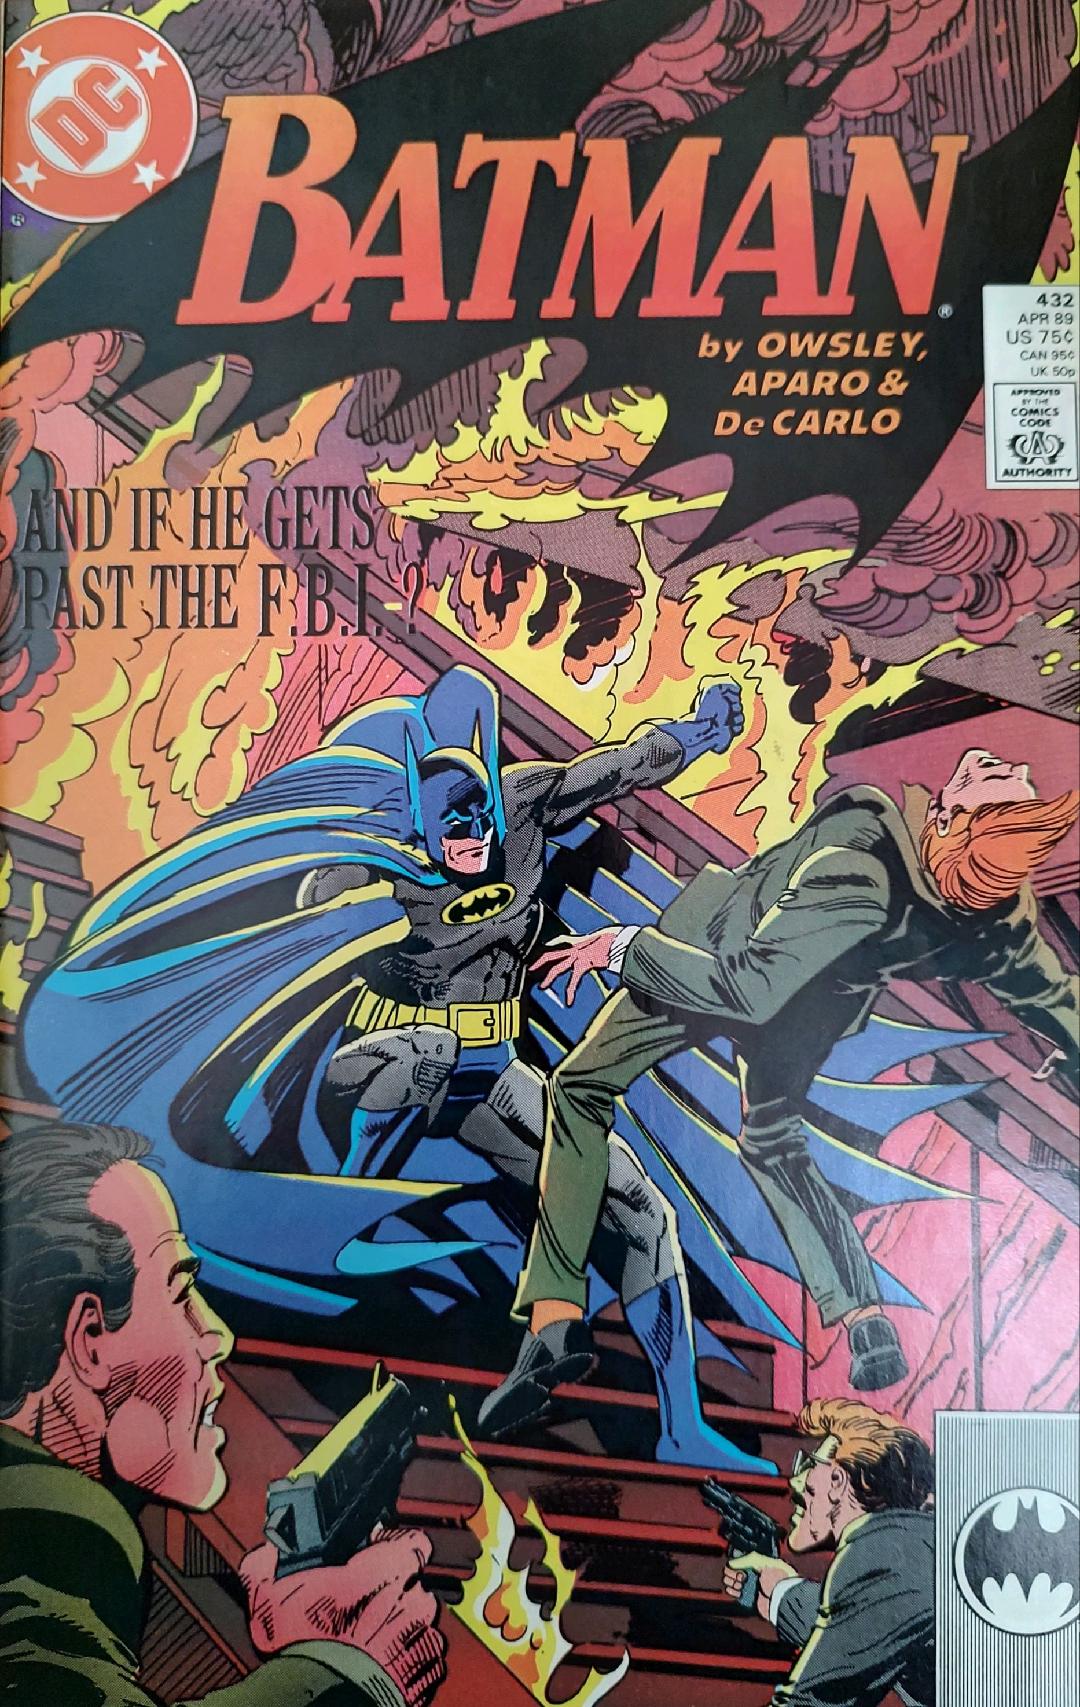 Batman #432 Comic Book